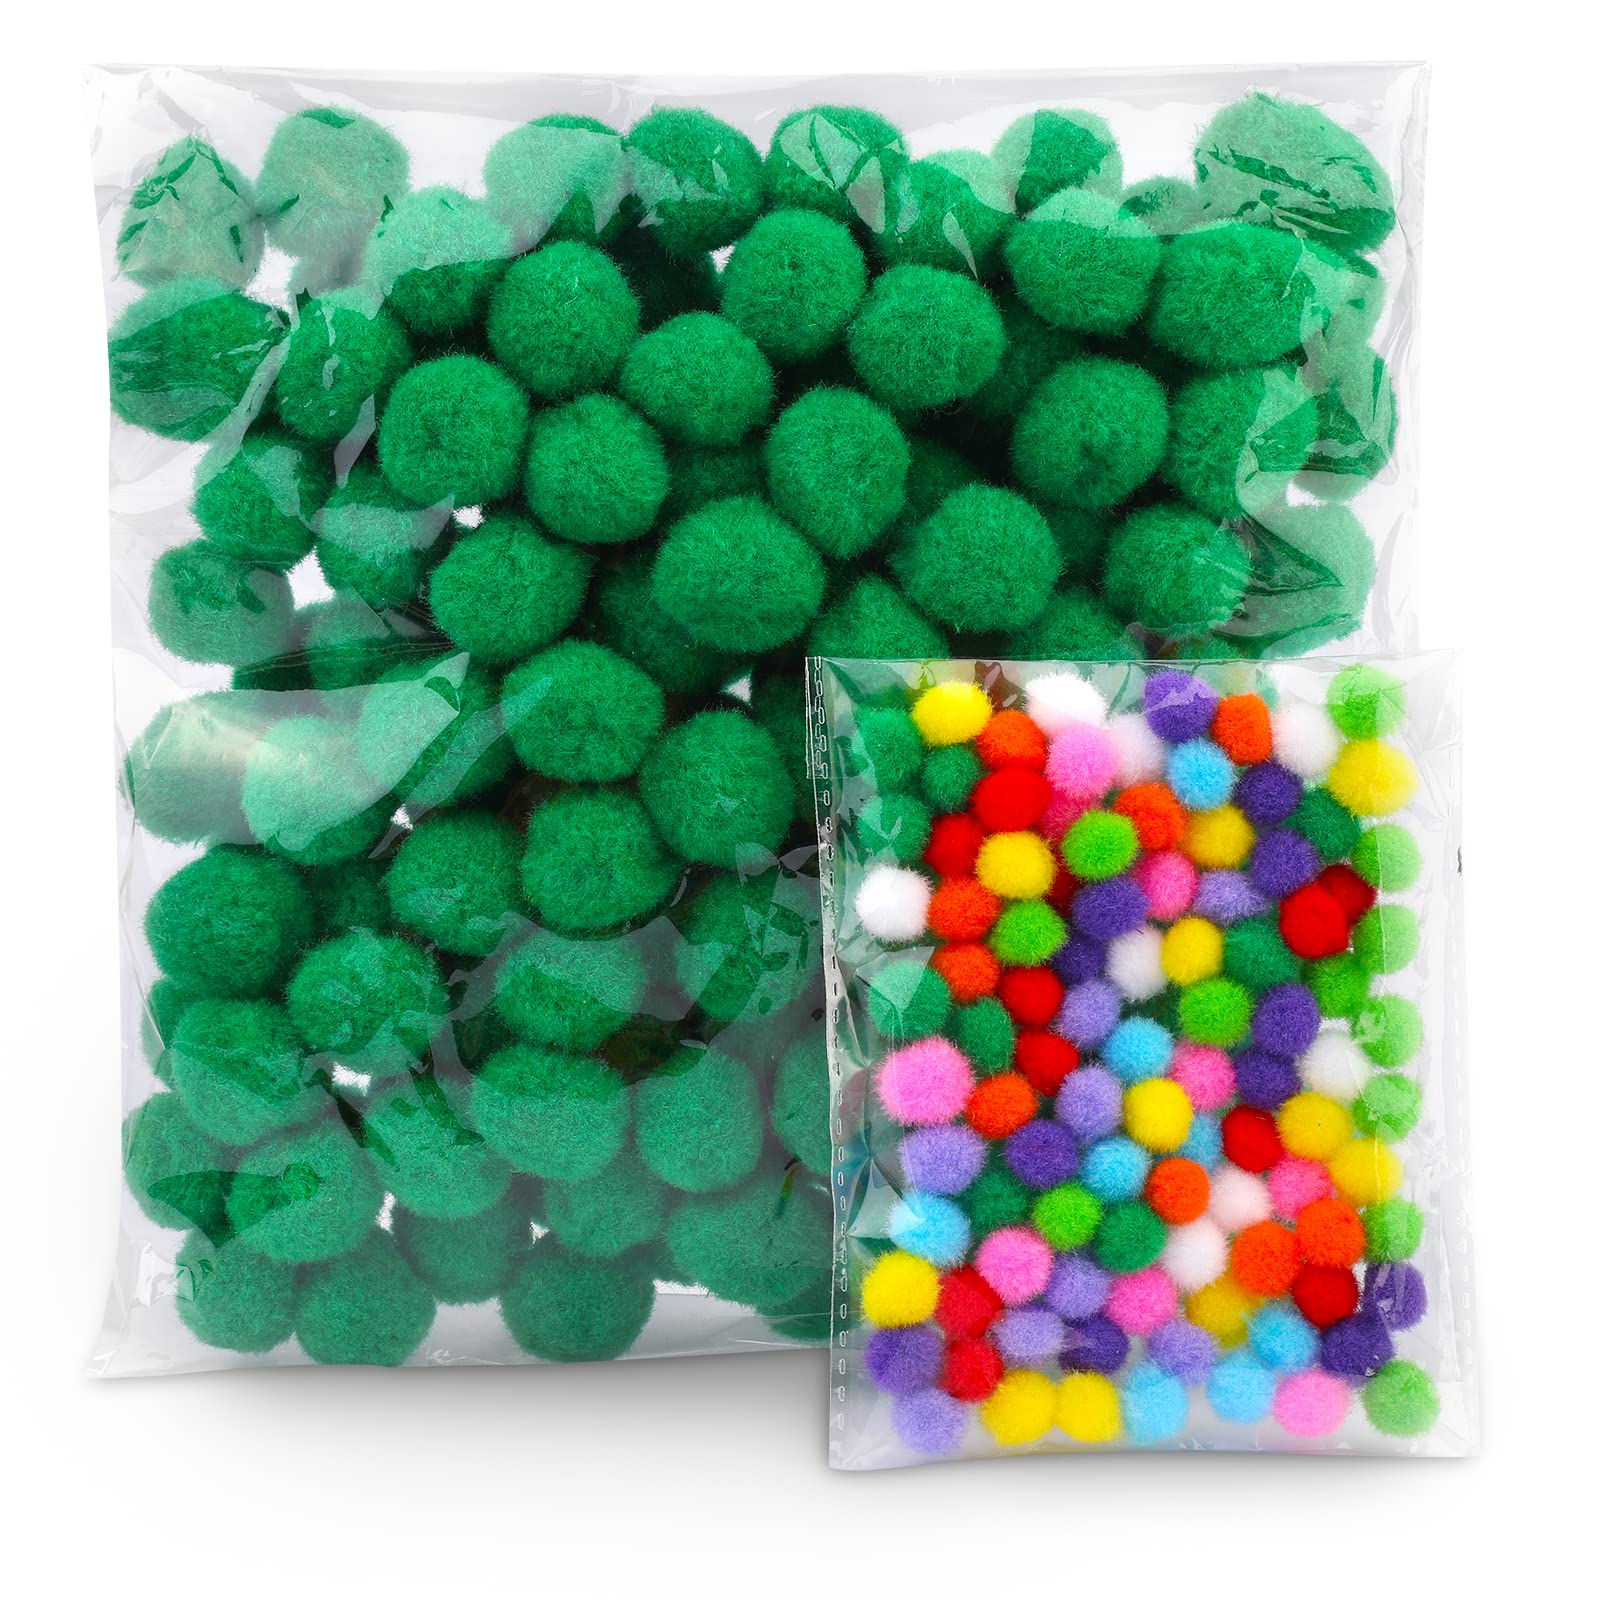 250 Pcs 150 1 inch Green Craft Pom Poms + 100 Multicolor Pom Pom Balls Small